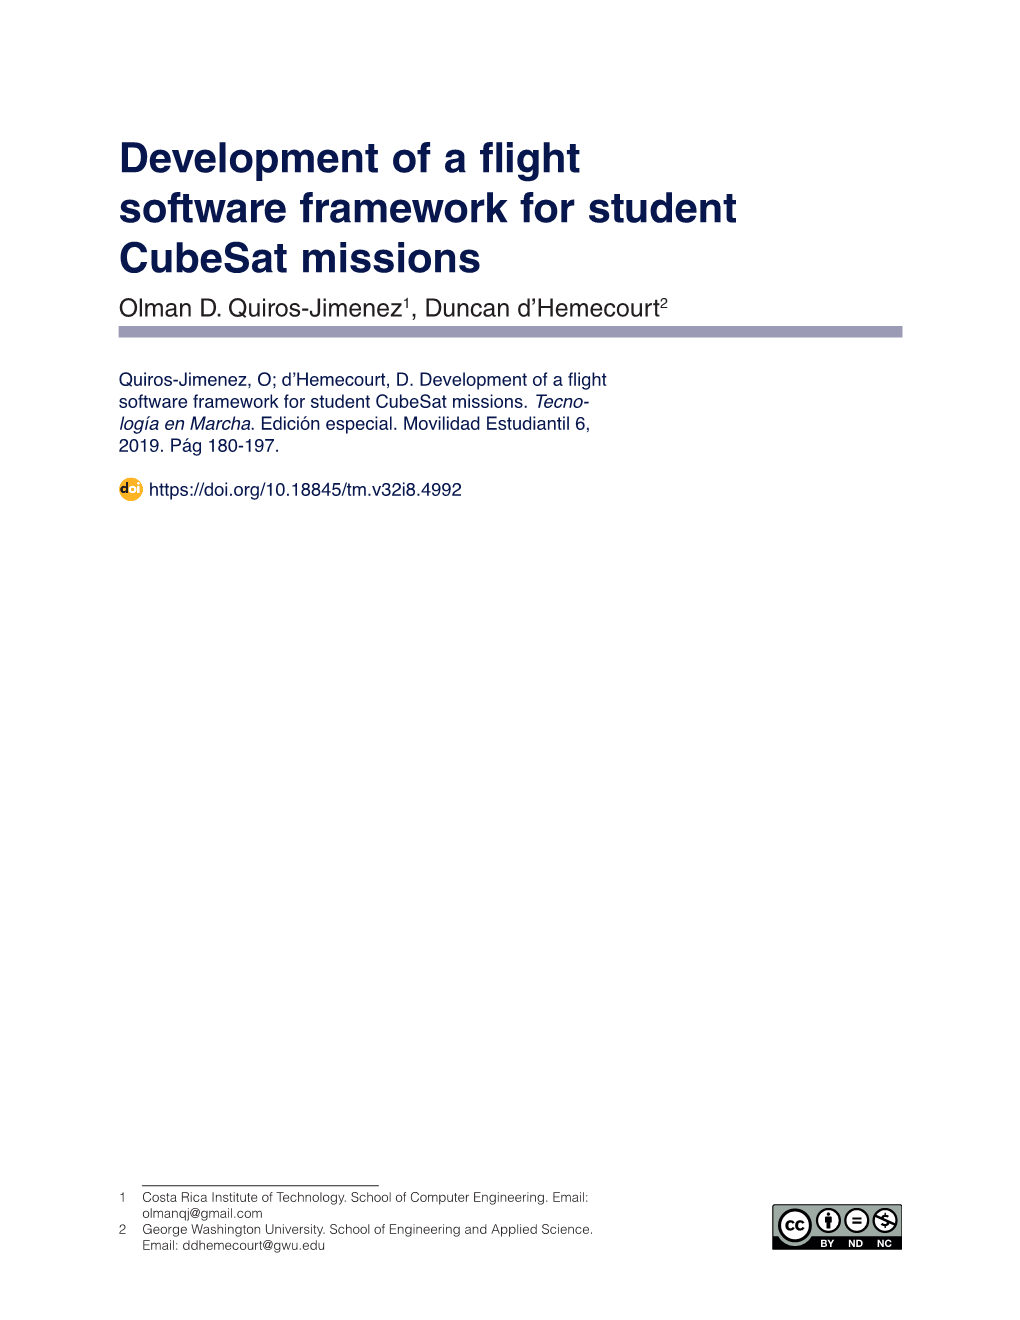 Development of a Flight Software Framework for Student Cubesat Missions Olman D